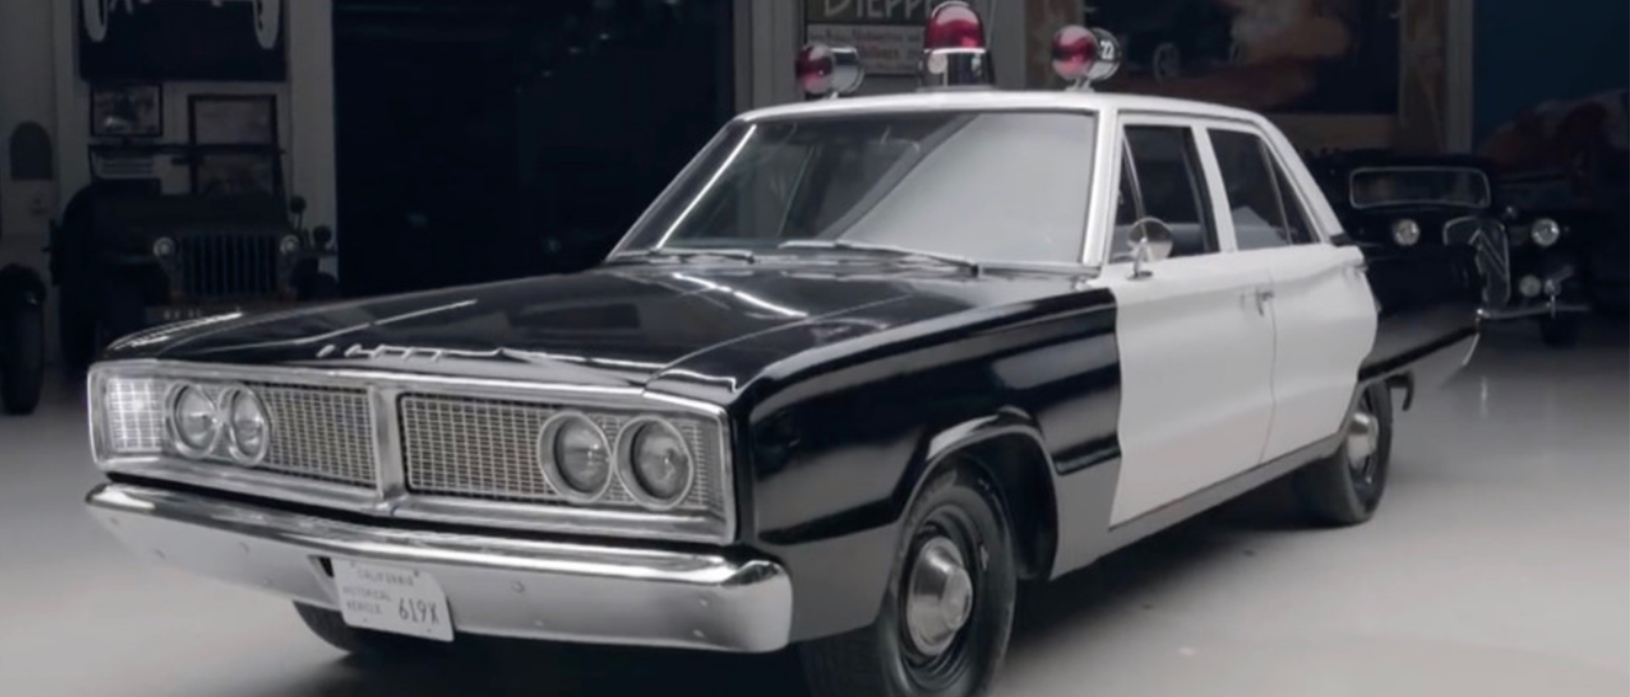 1966 Dodge Coronet police car